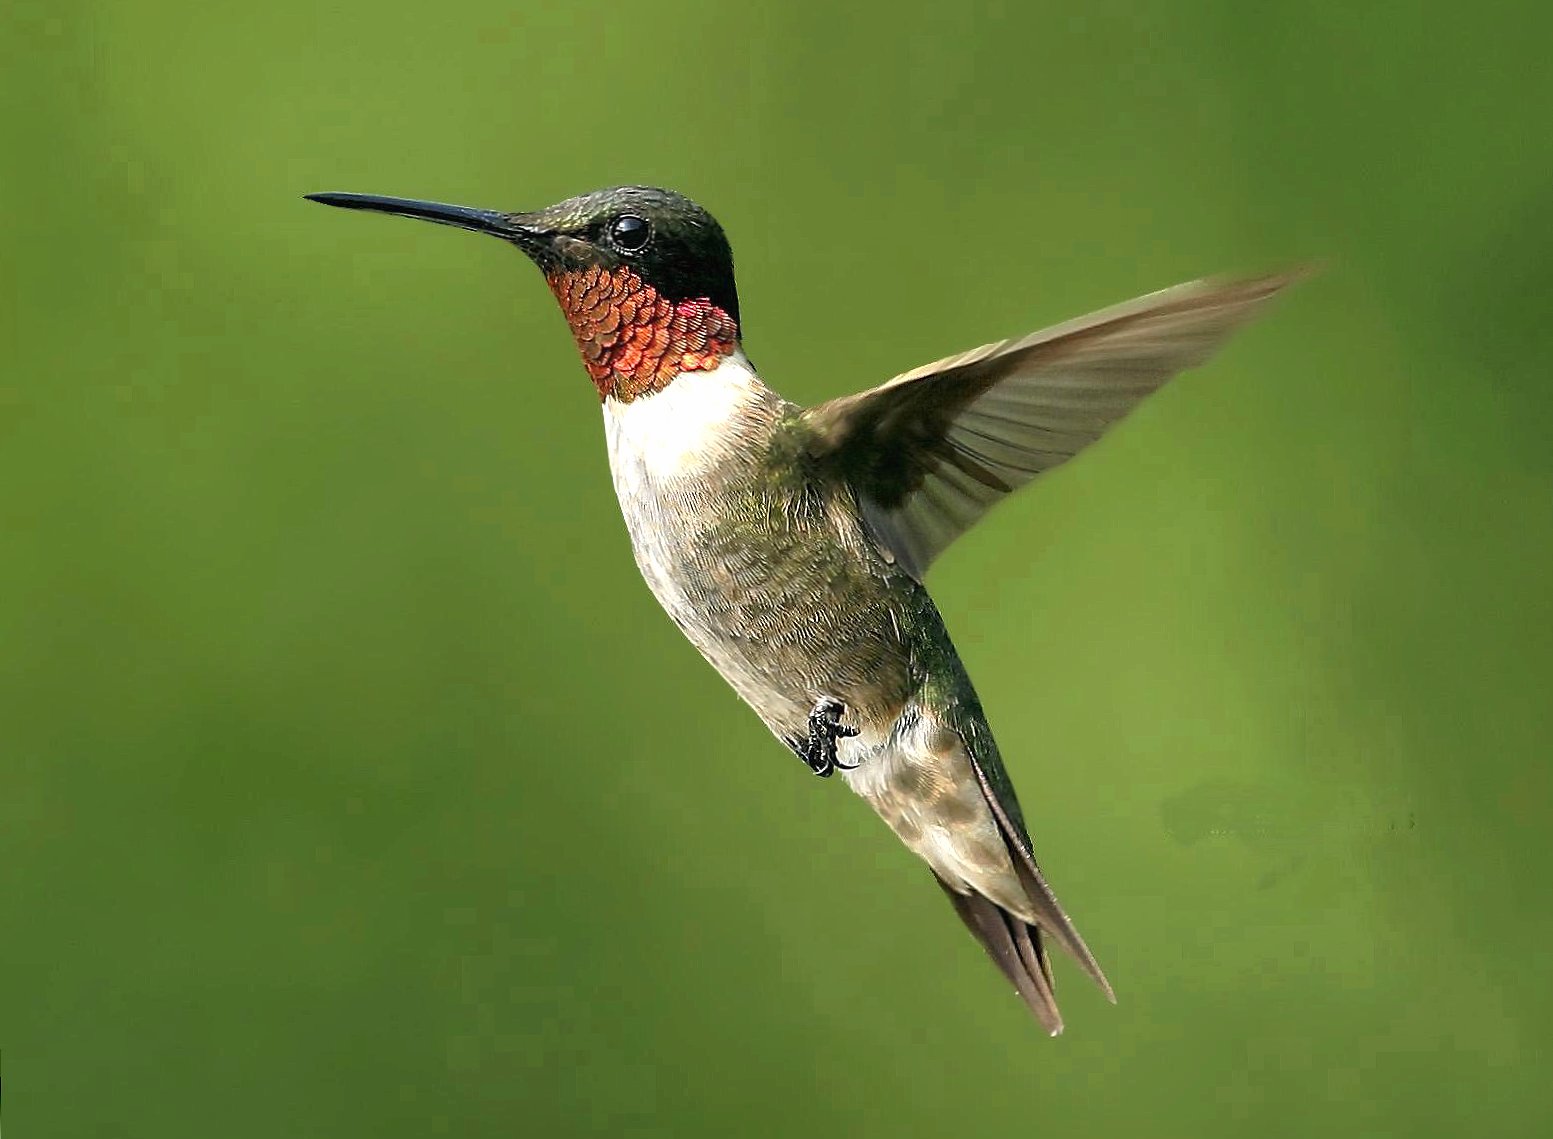 Flying hummingbird at 1024 x 1024 iPad size wallpapers HD quality